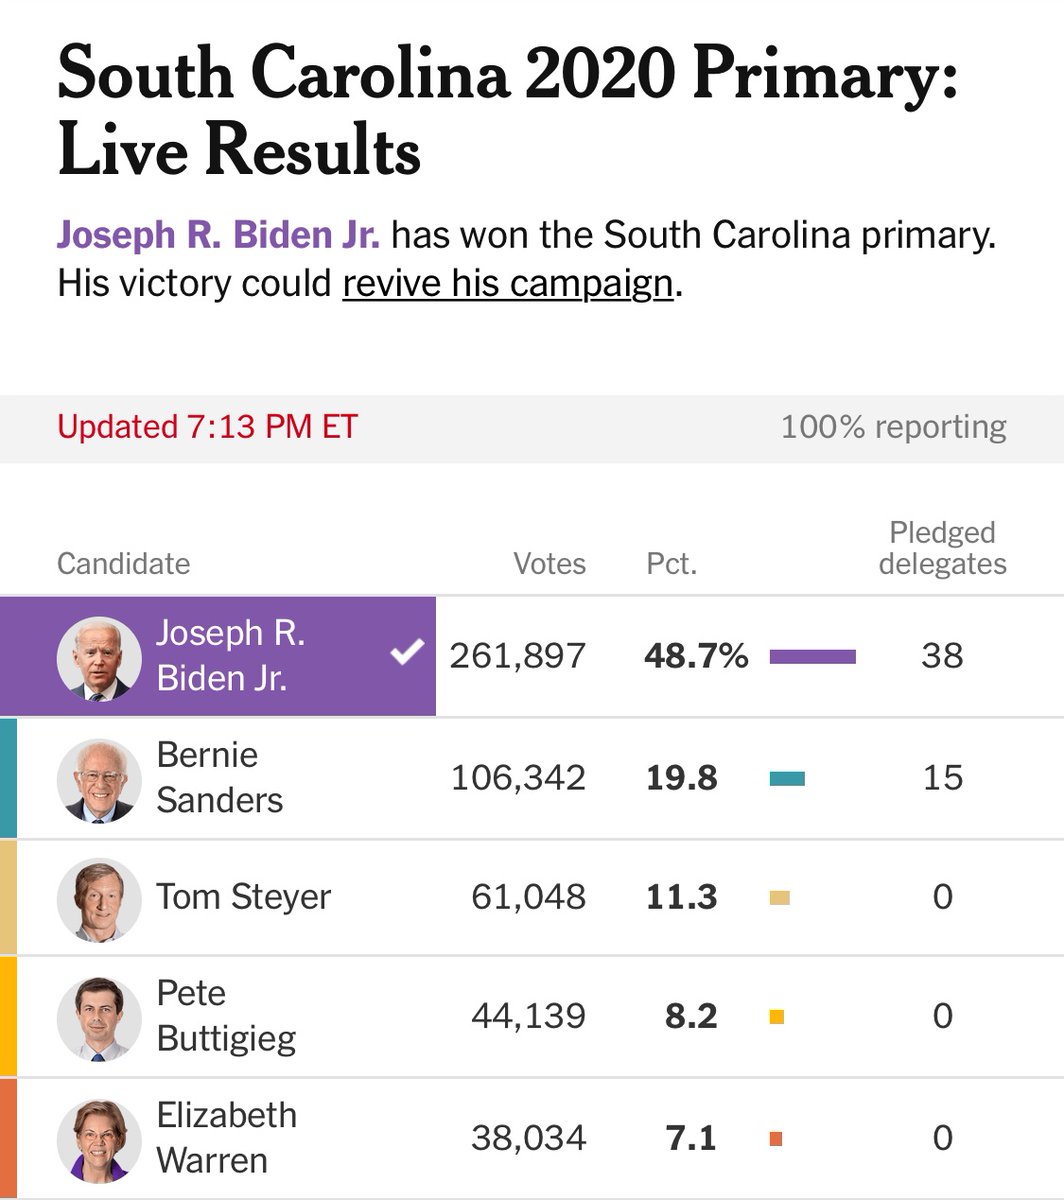 Bernie Sanders as states he lost to Biden, a thread: South Carolina